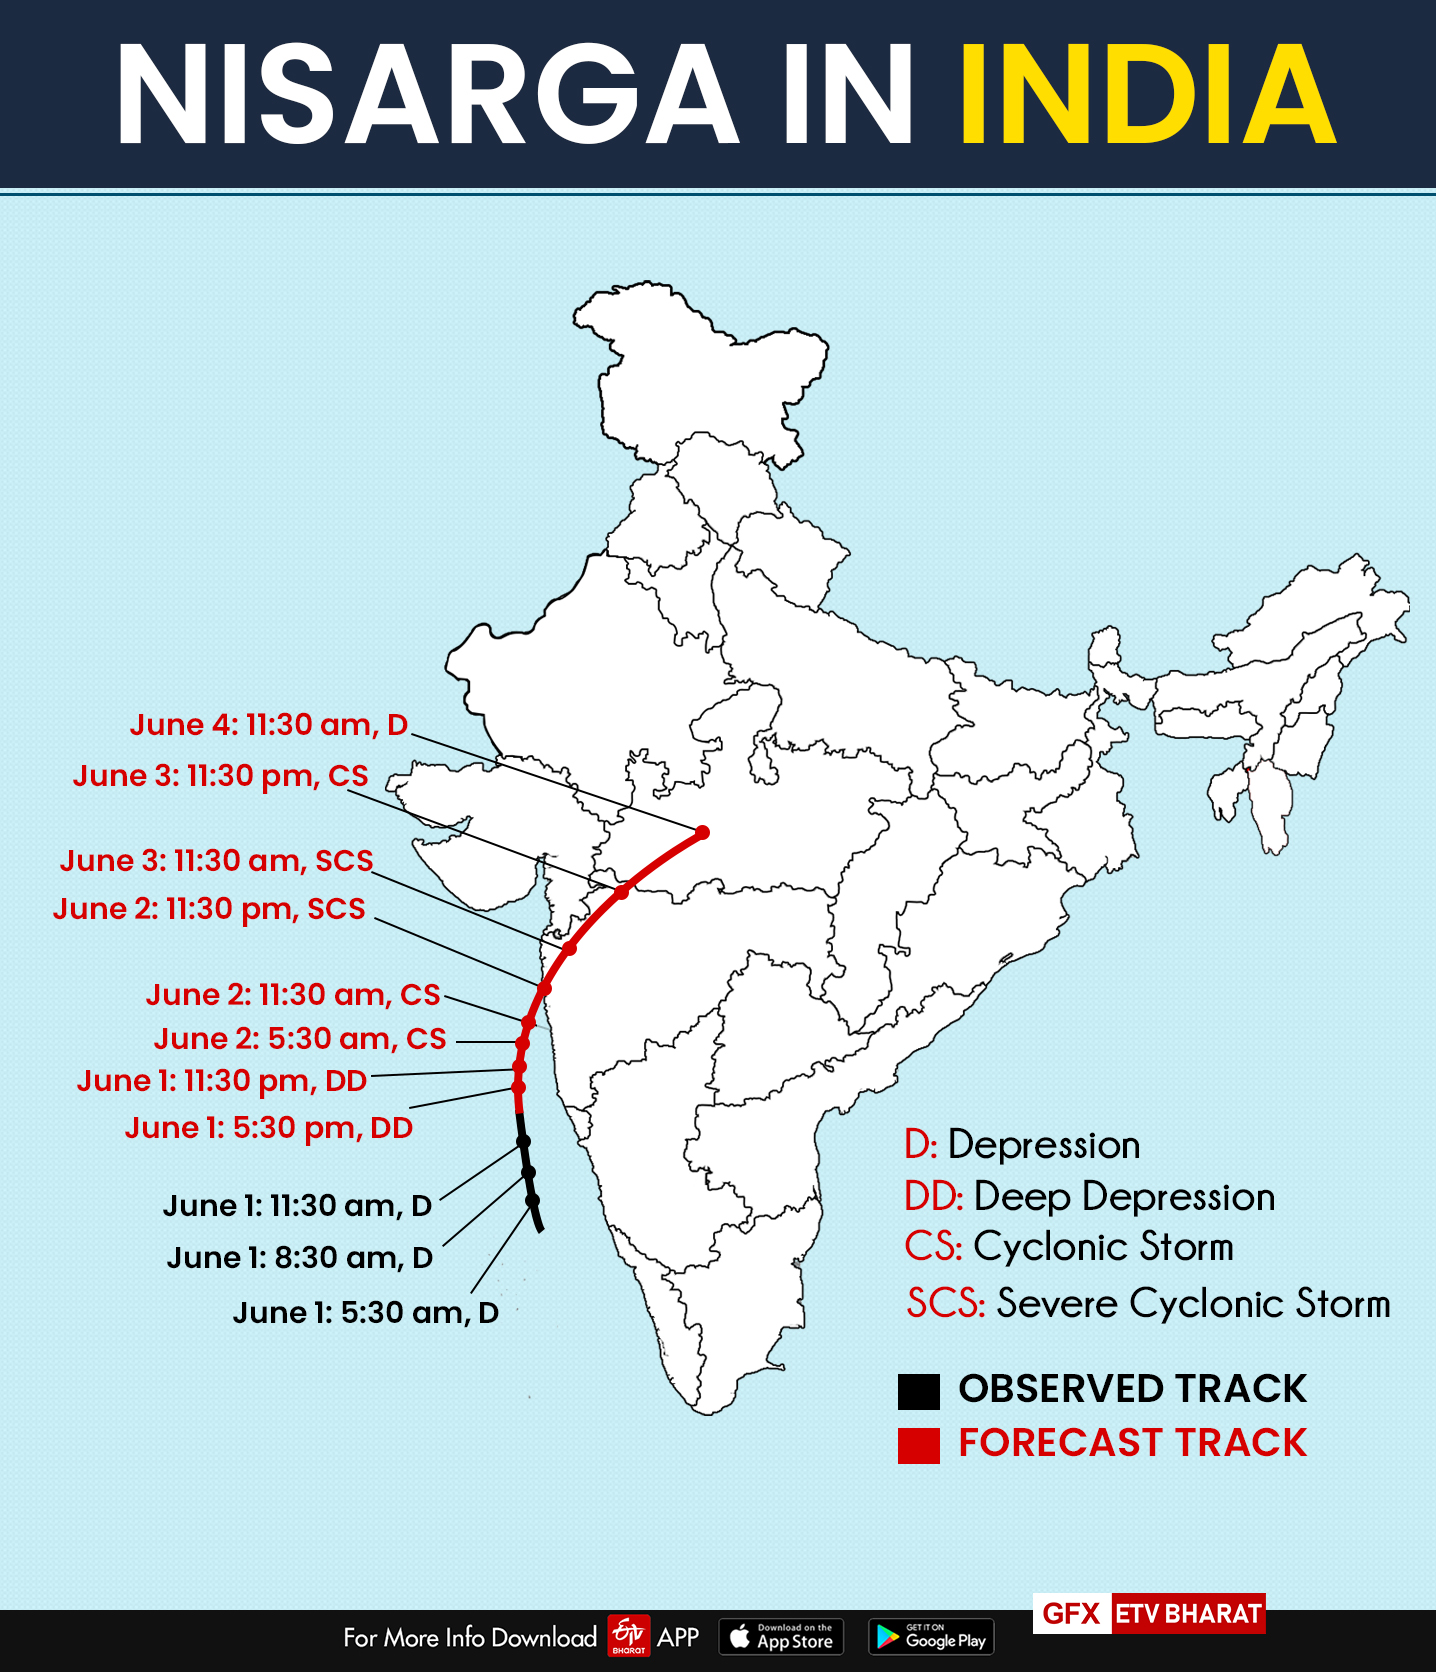 Nisarga is likely to make landfall between Harihareshwar in Maharashtra’s Raigad and Daman on June 3